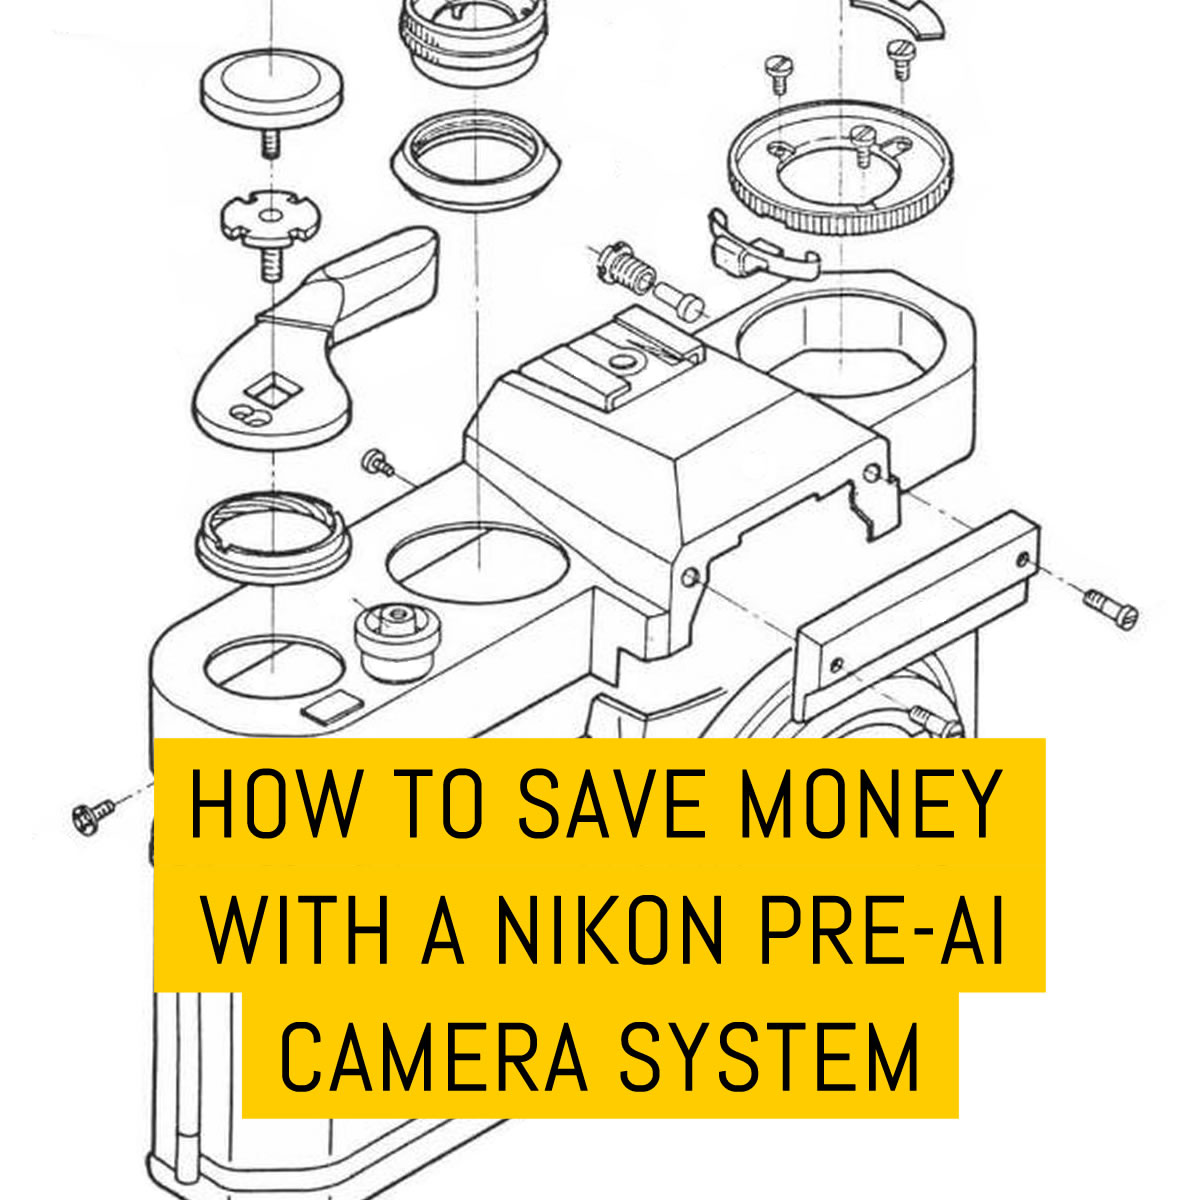 How to save money with a Nikon Pre-AI camera system